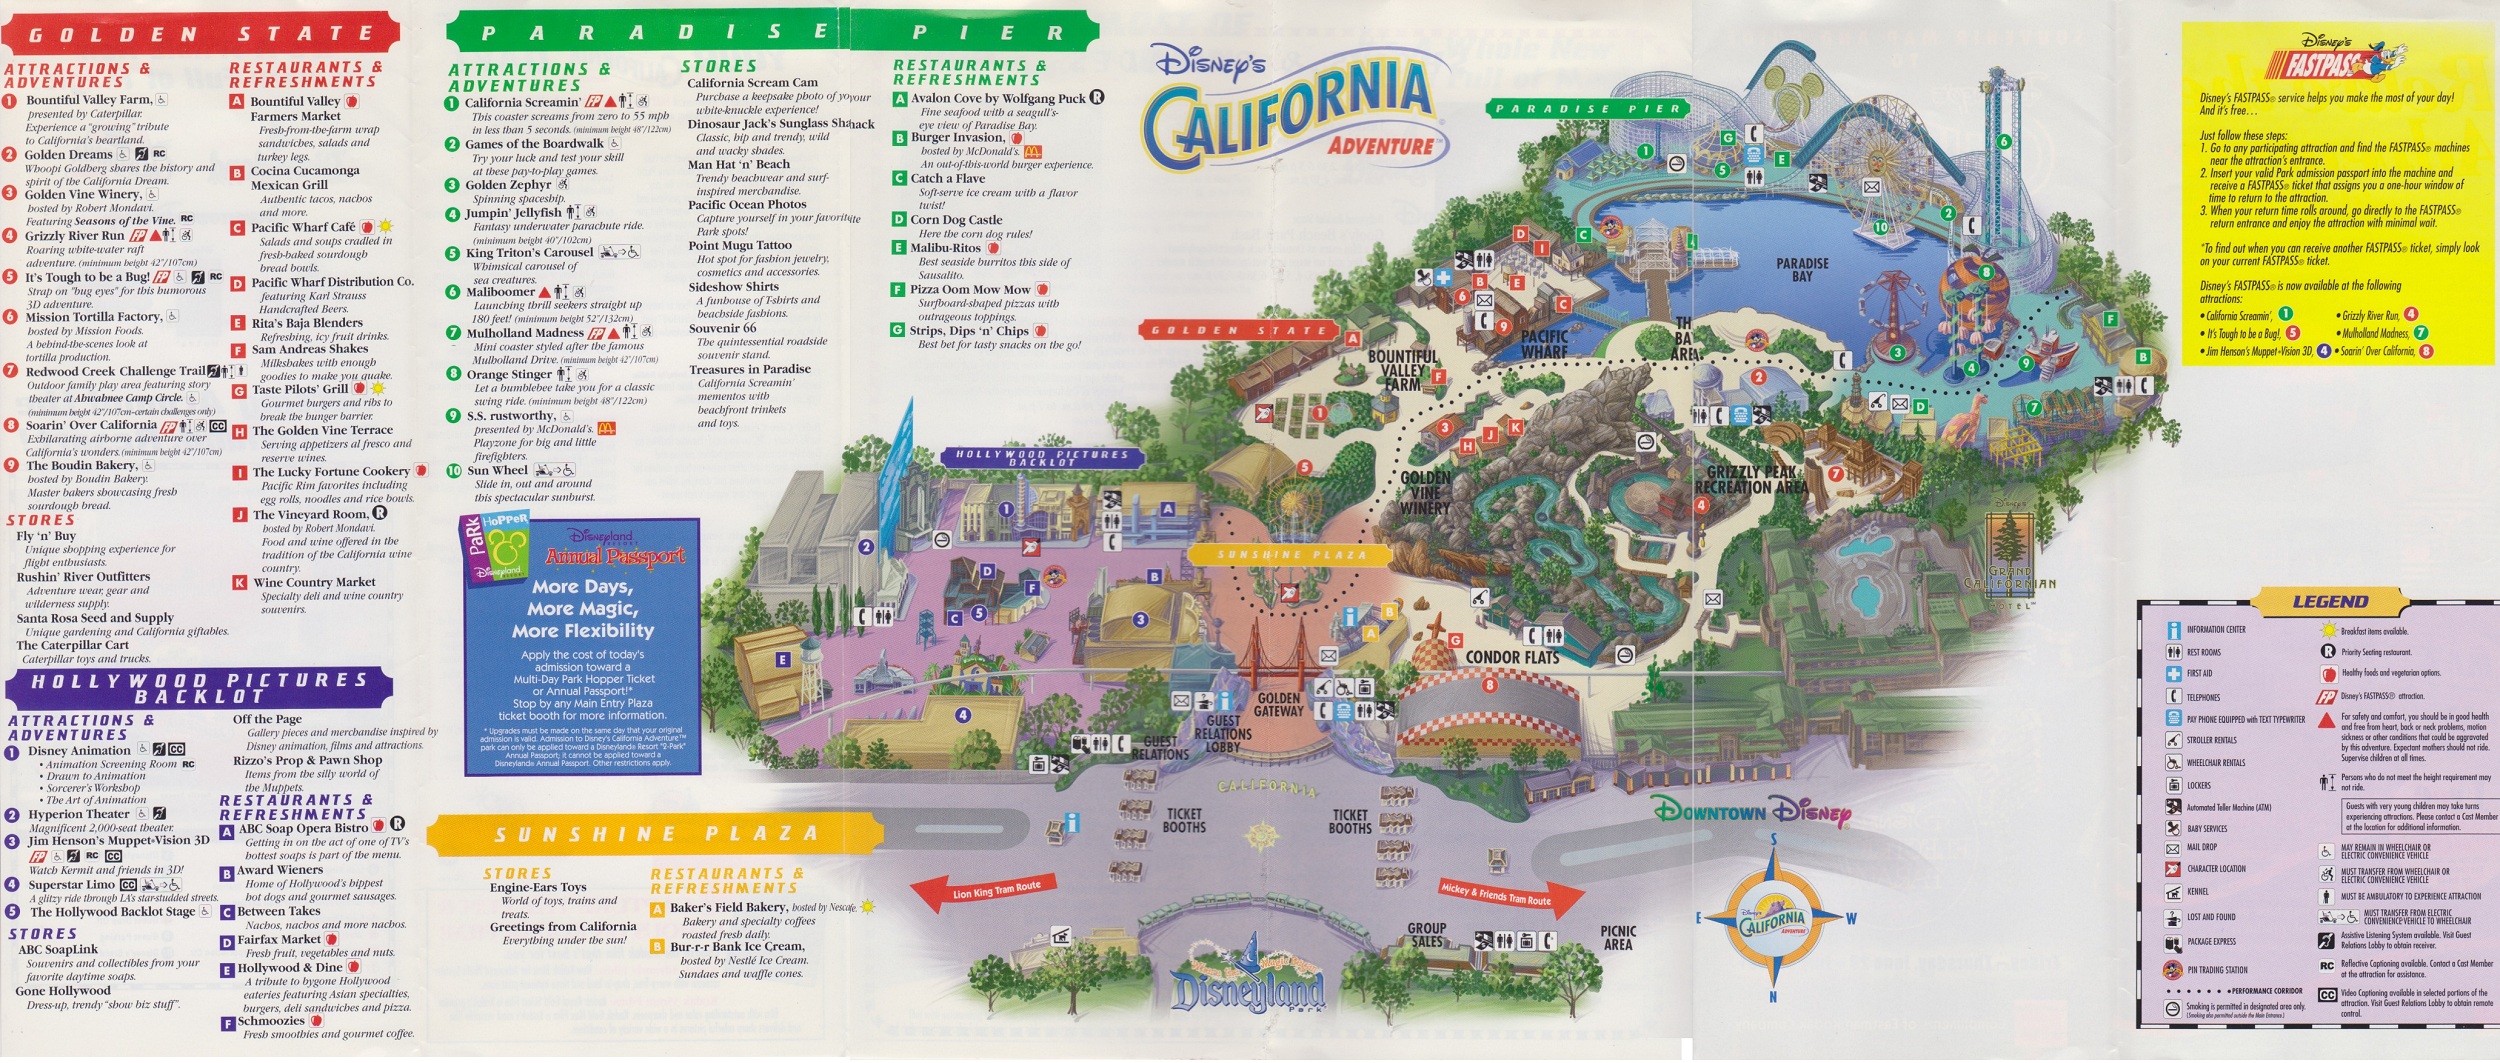 Disney Ephemera 2001 Disney S California Adventure Guide Map